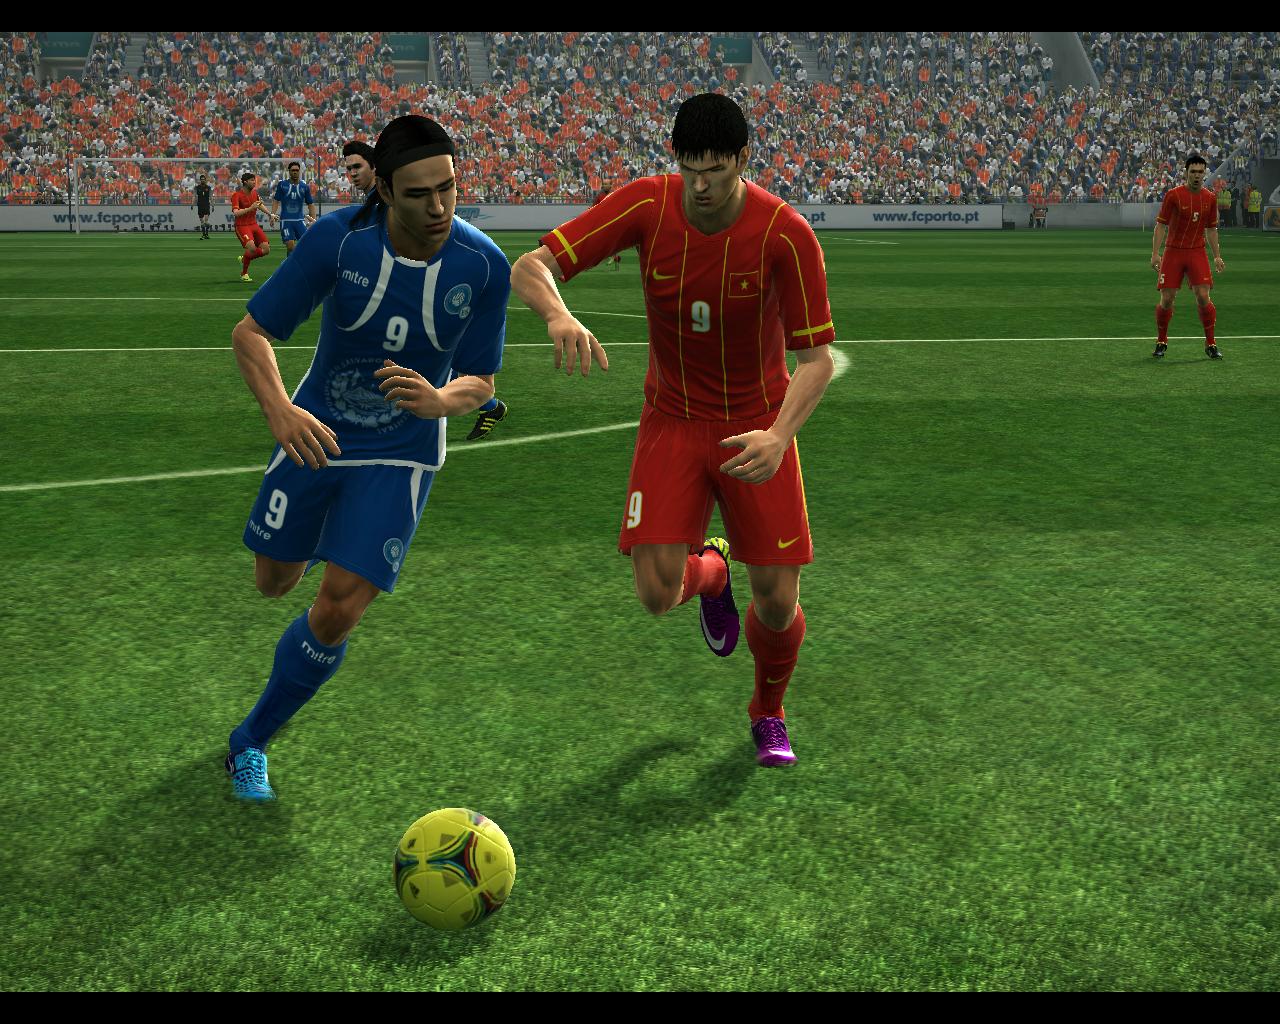 Вторая игра футбол. Pro Evolution Soccer 2012. PES 2012 игр. Pro Evolution Soccer 2012 real m. Игра футбол СОККЕР 2012.